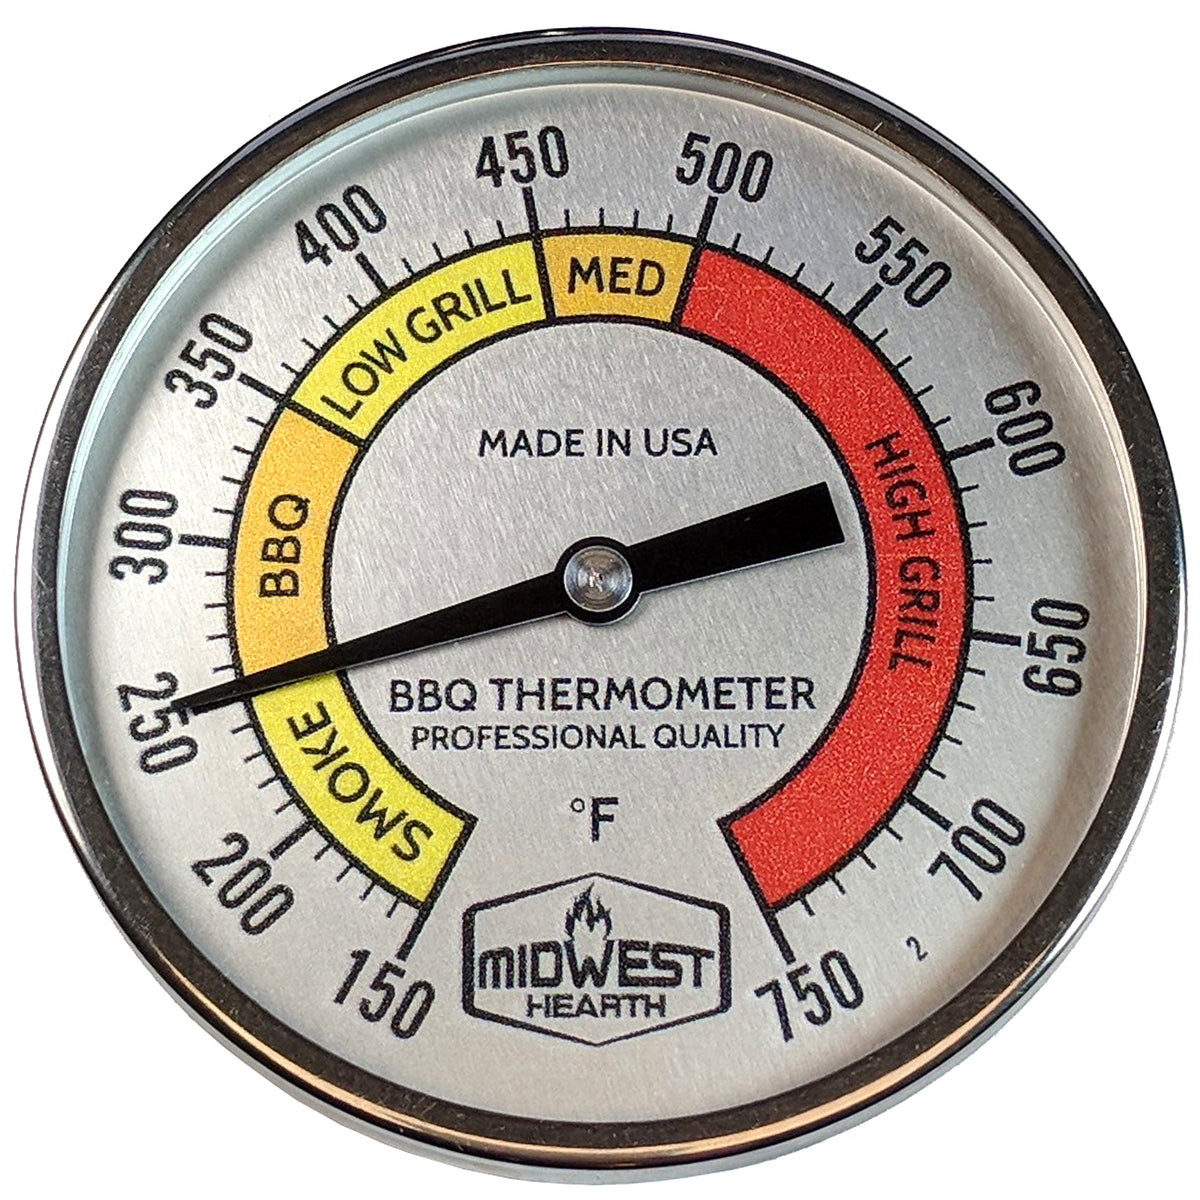 KJ-T23 - Thermometer - Kamado Joe